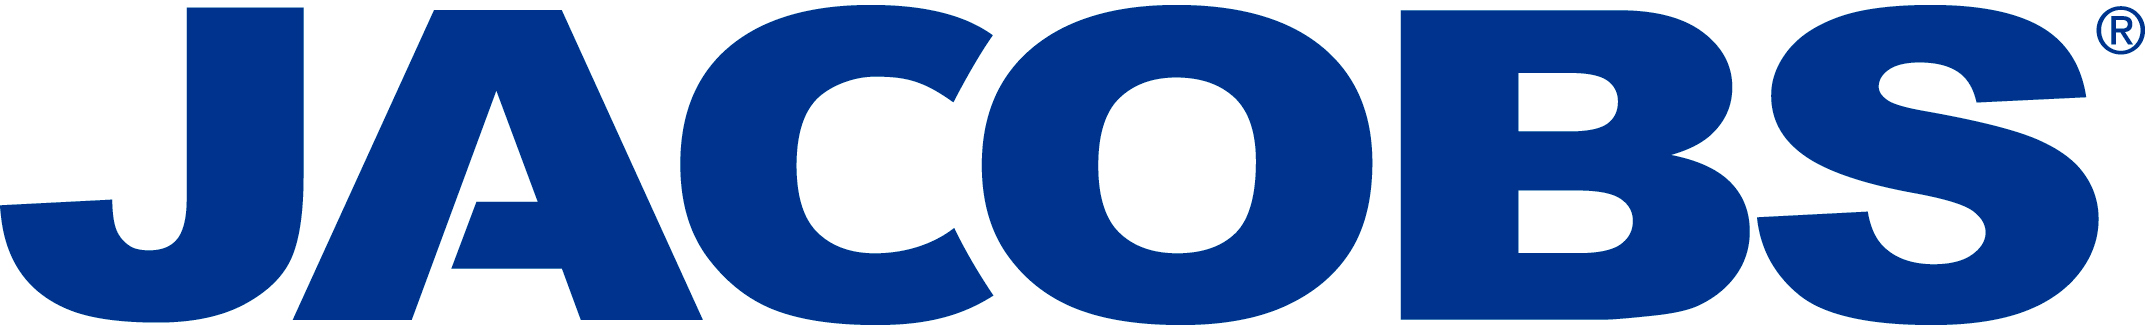 Jacobs Logo_Blue.jpg